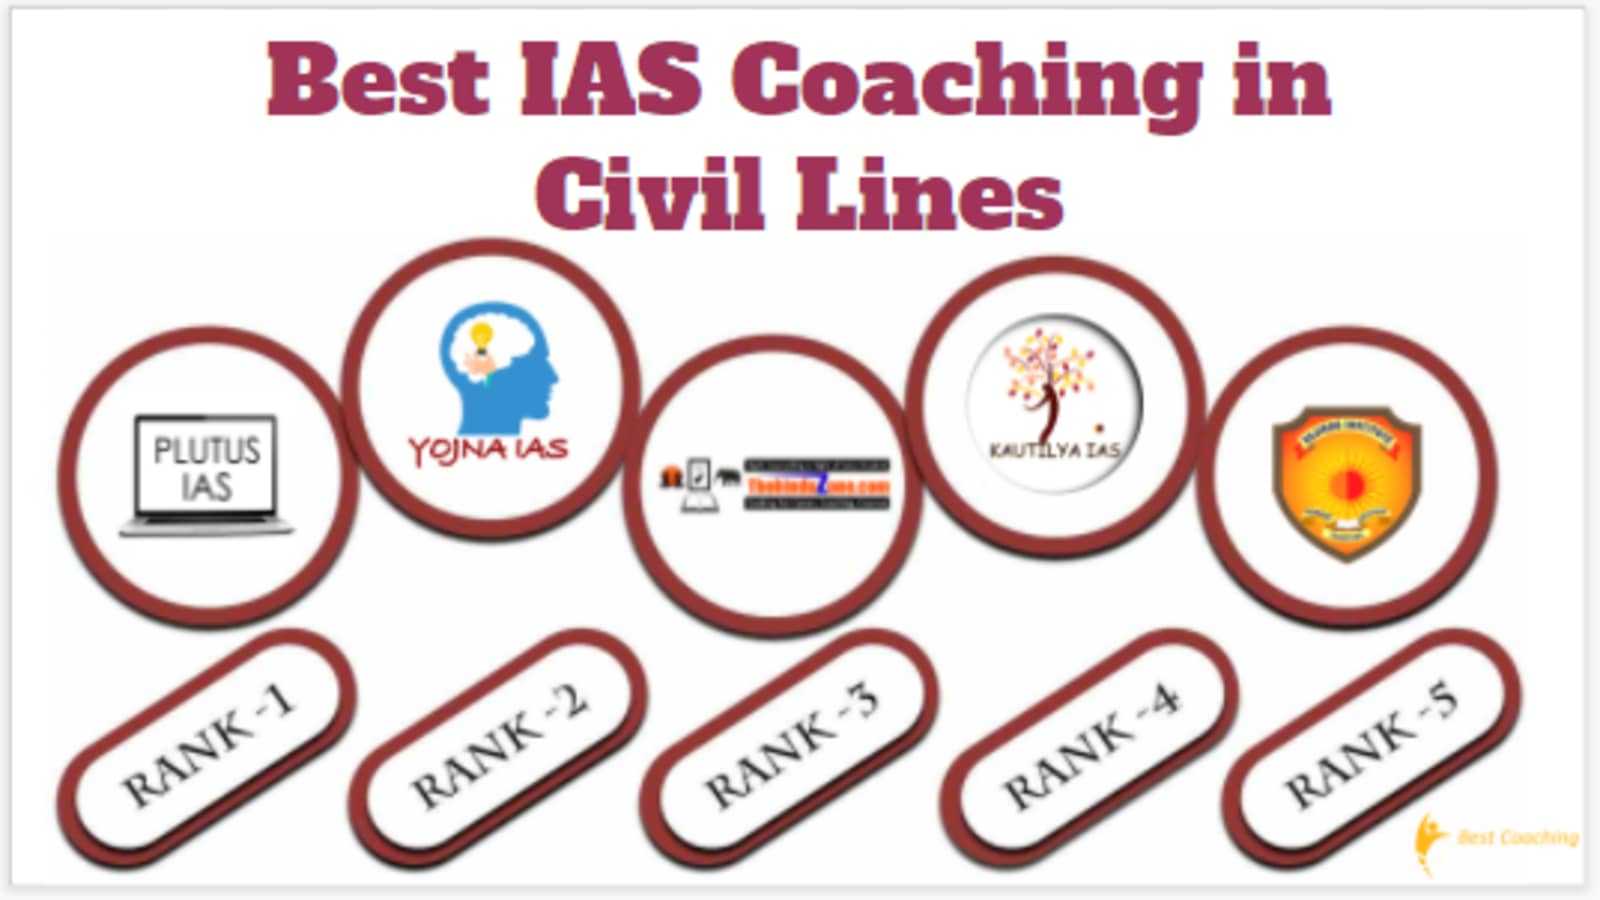 Best IAS Coaching in Civil Lines